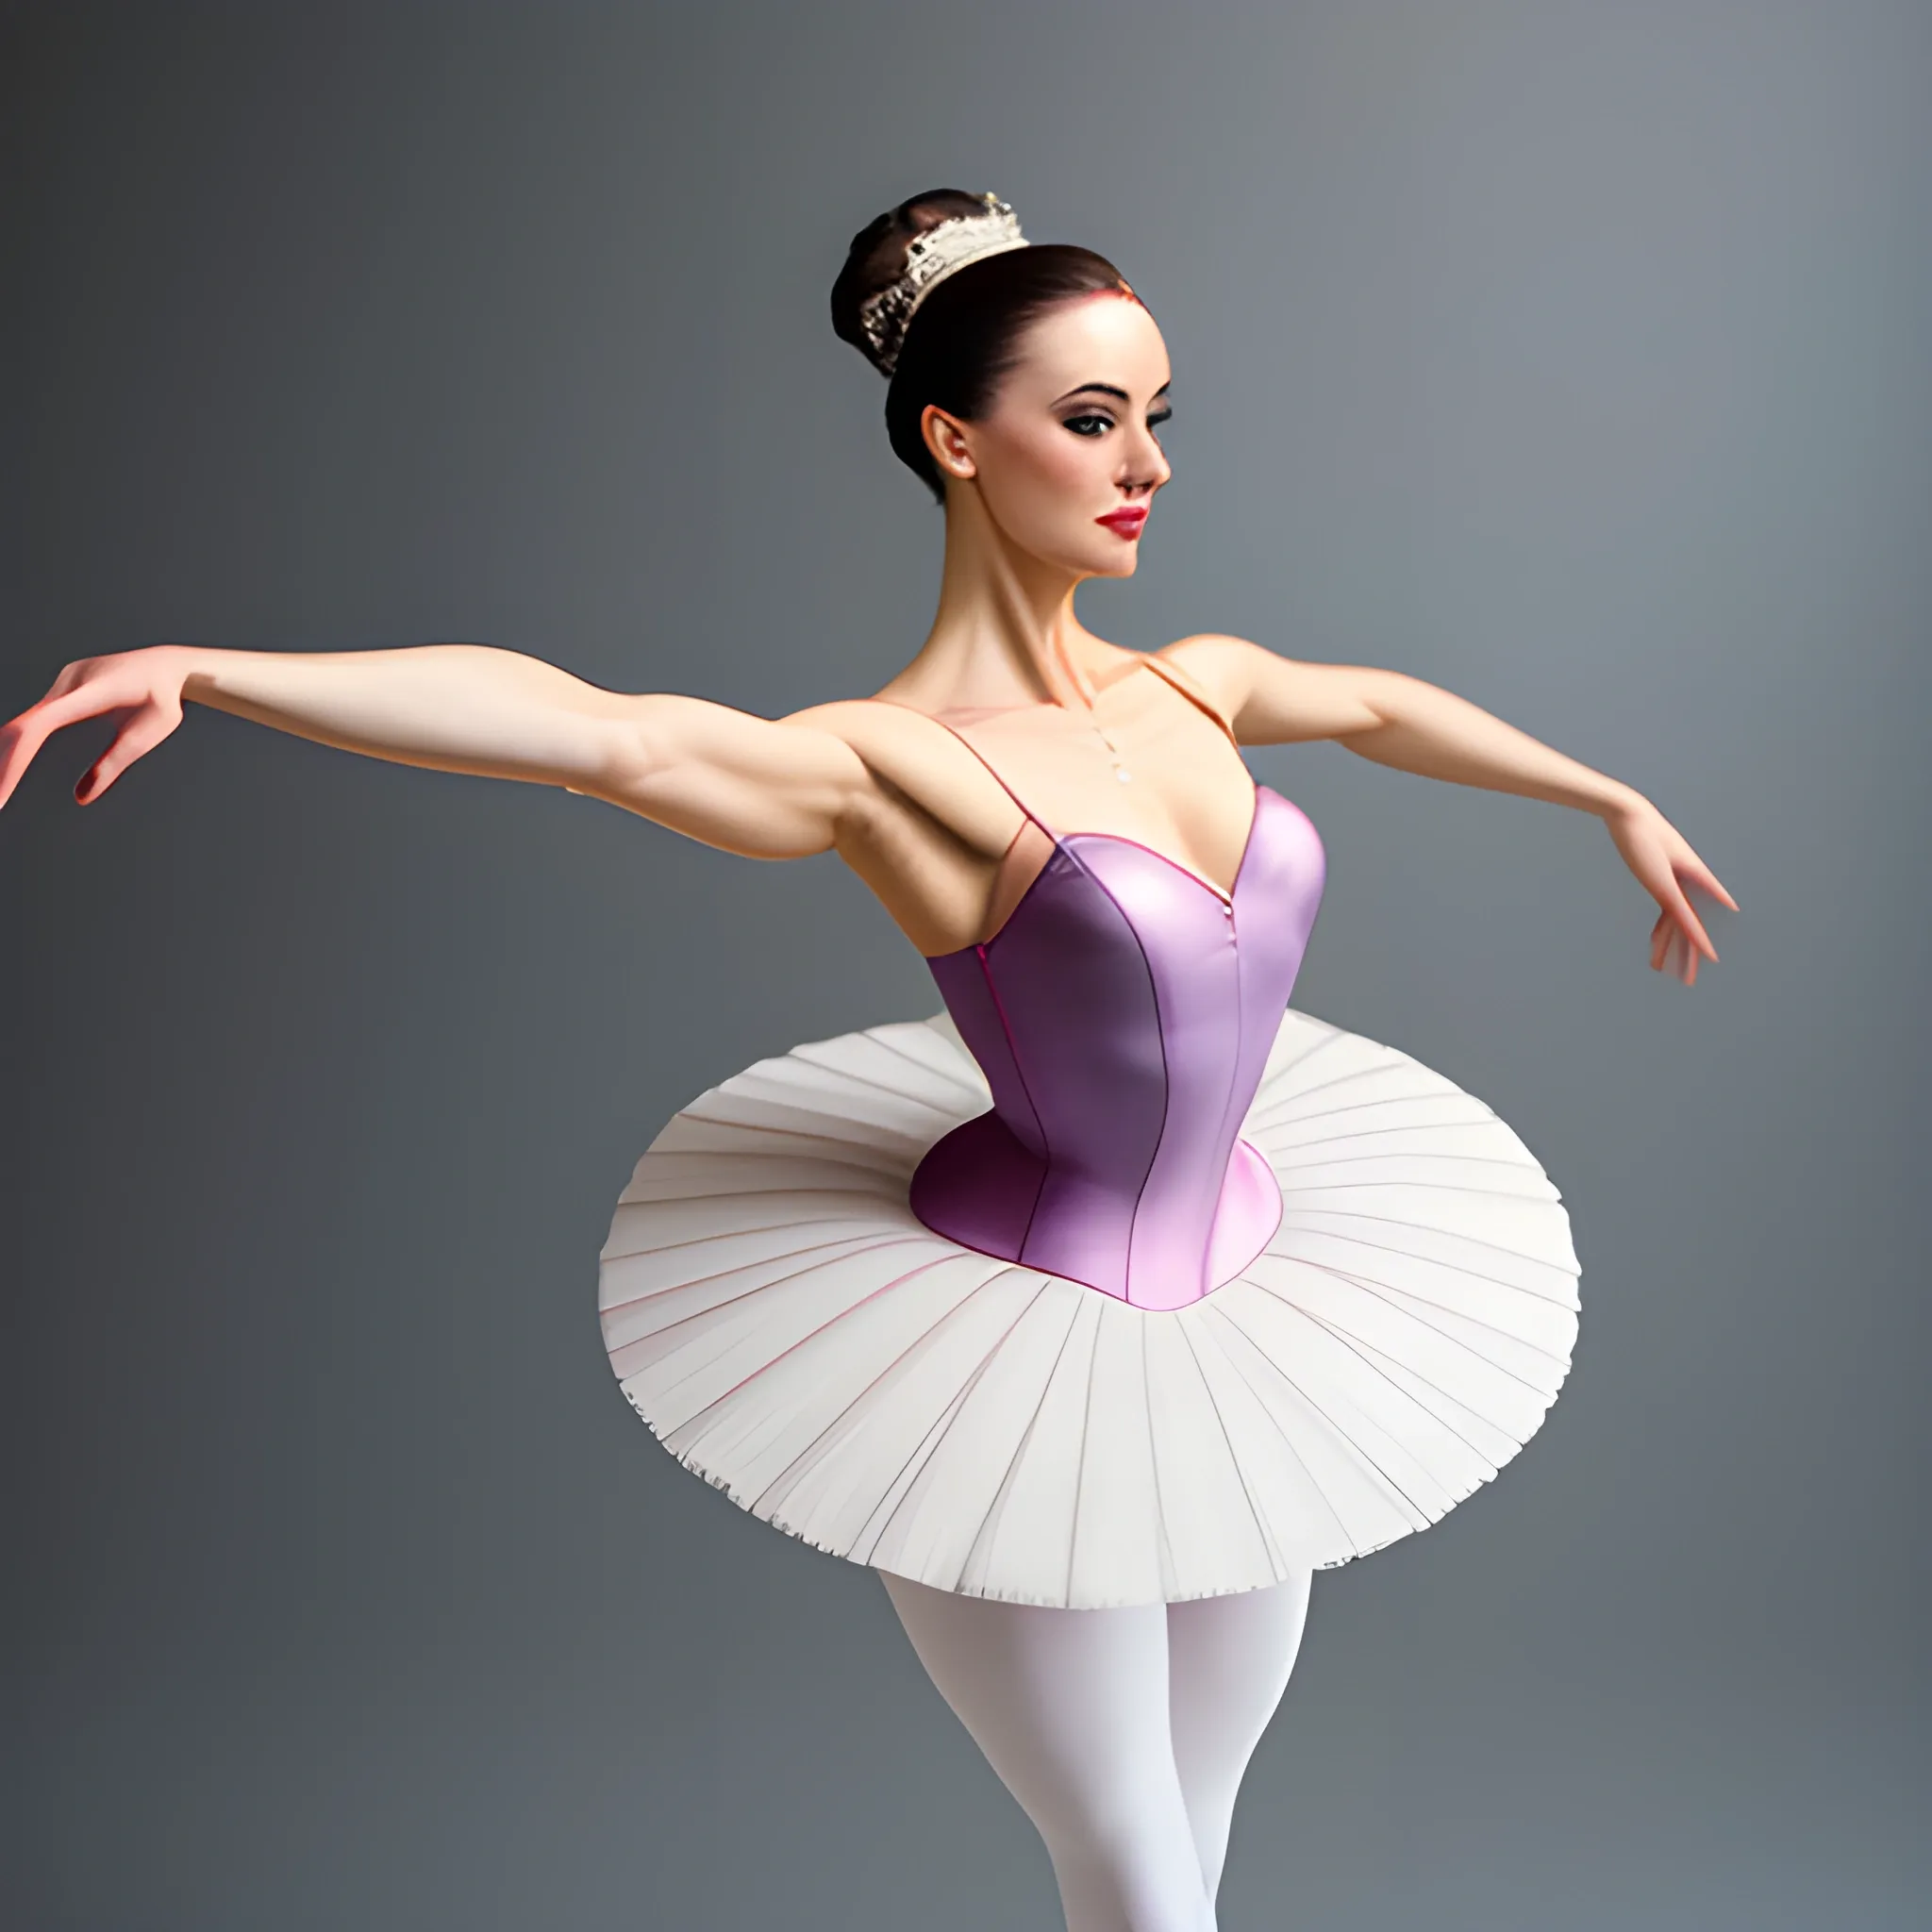 beautiful ballerina girl mid pirouette, hyper detail